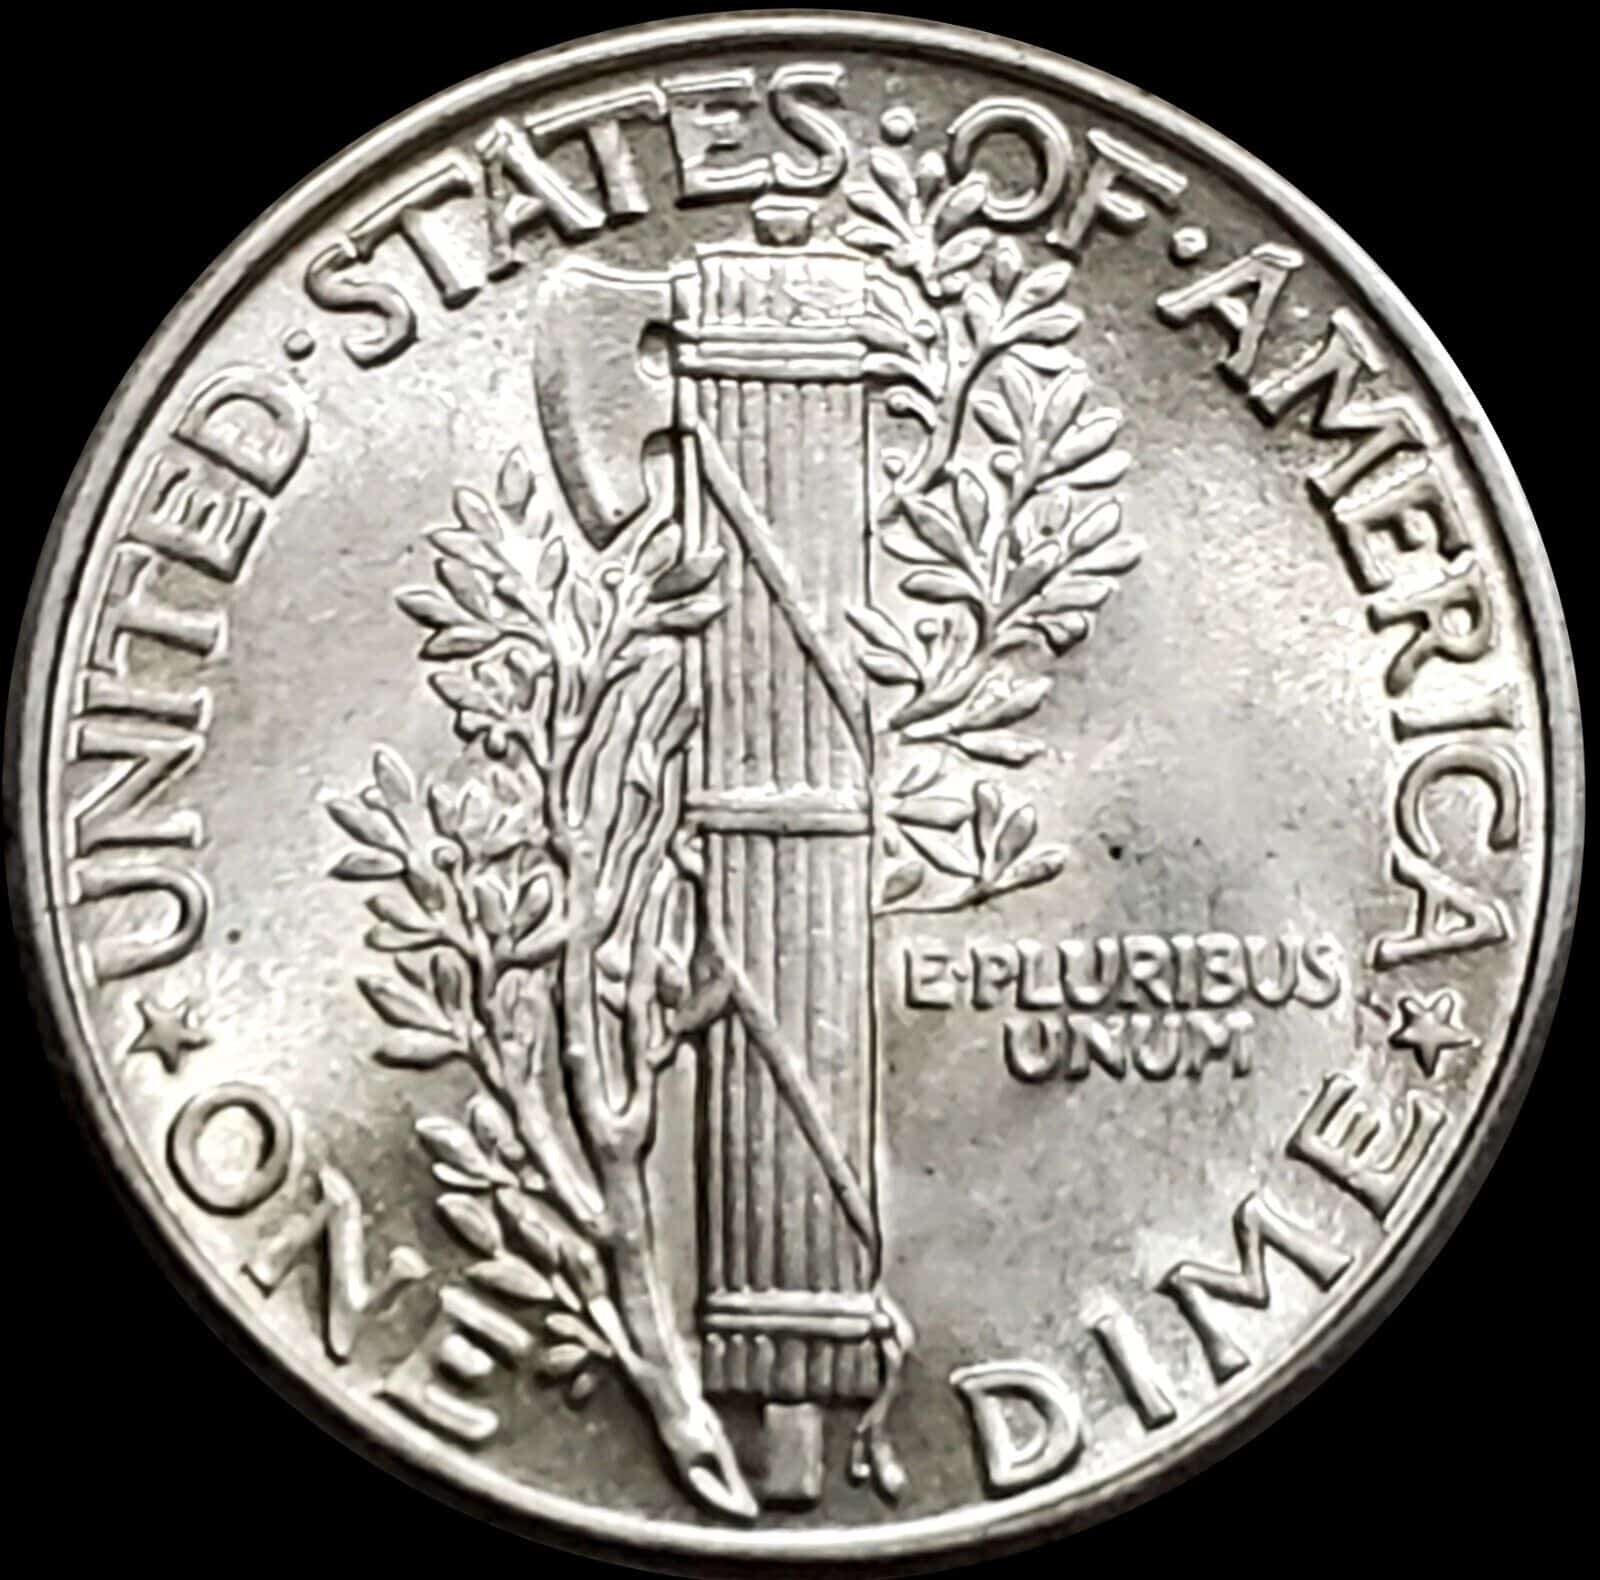 1927 No Mint Mark Mercury Dime